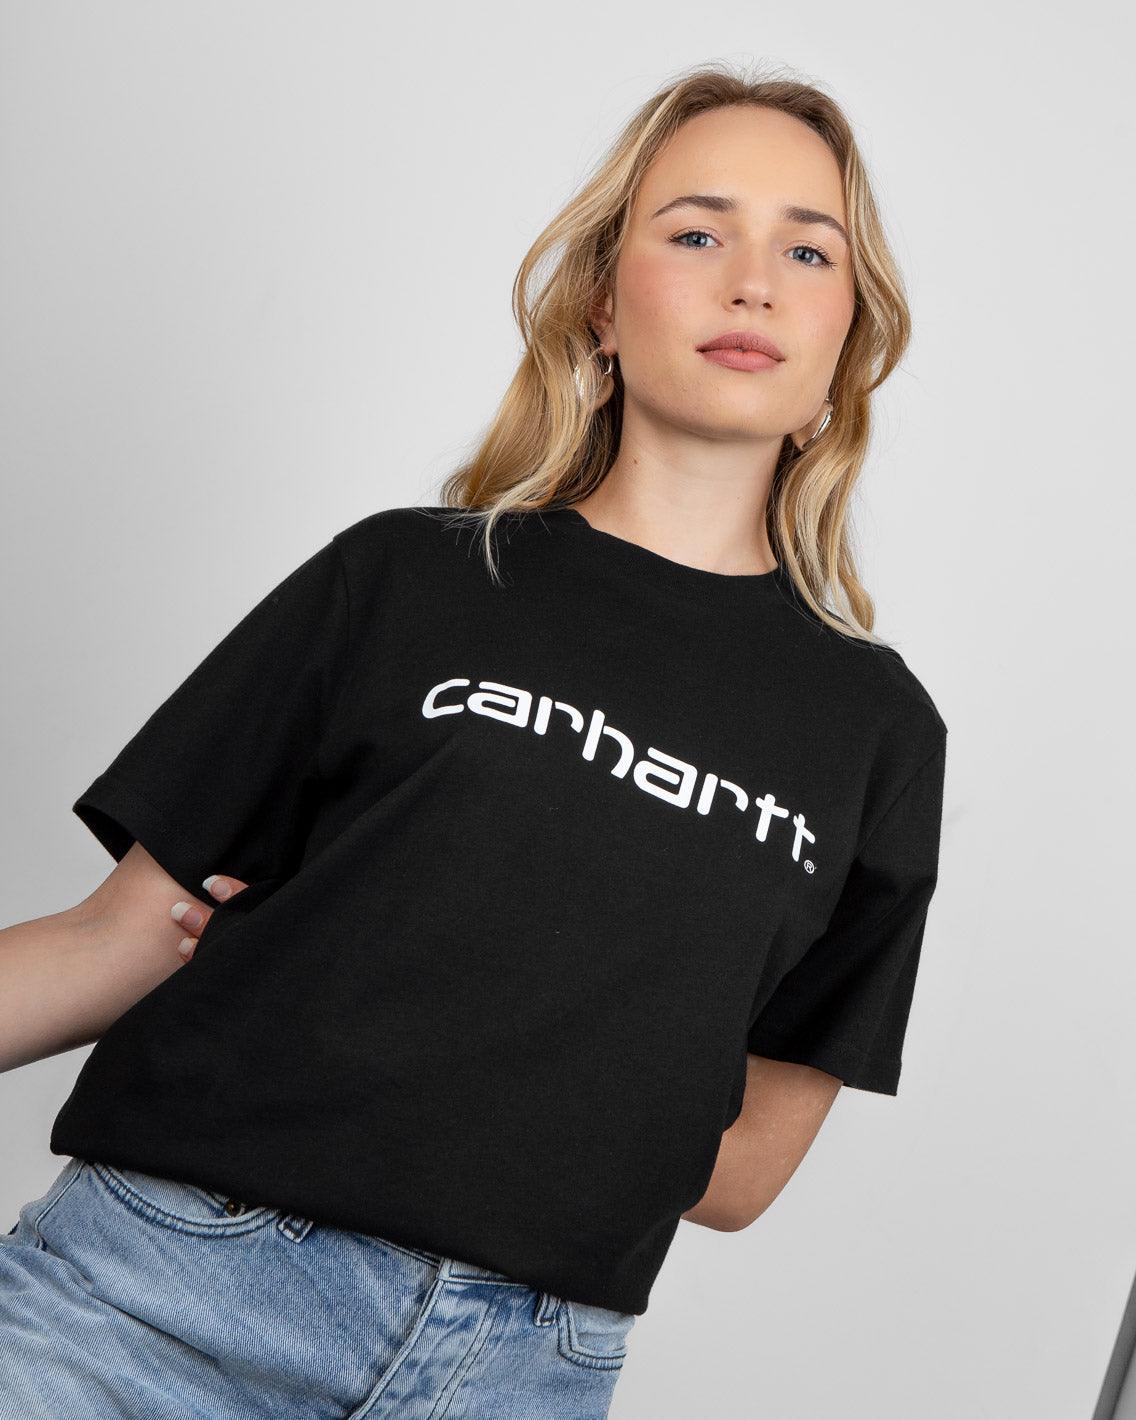 Carhartt - Script T-Shirt - Black / White T-Shirts Carhartt   